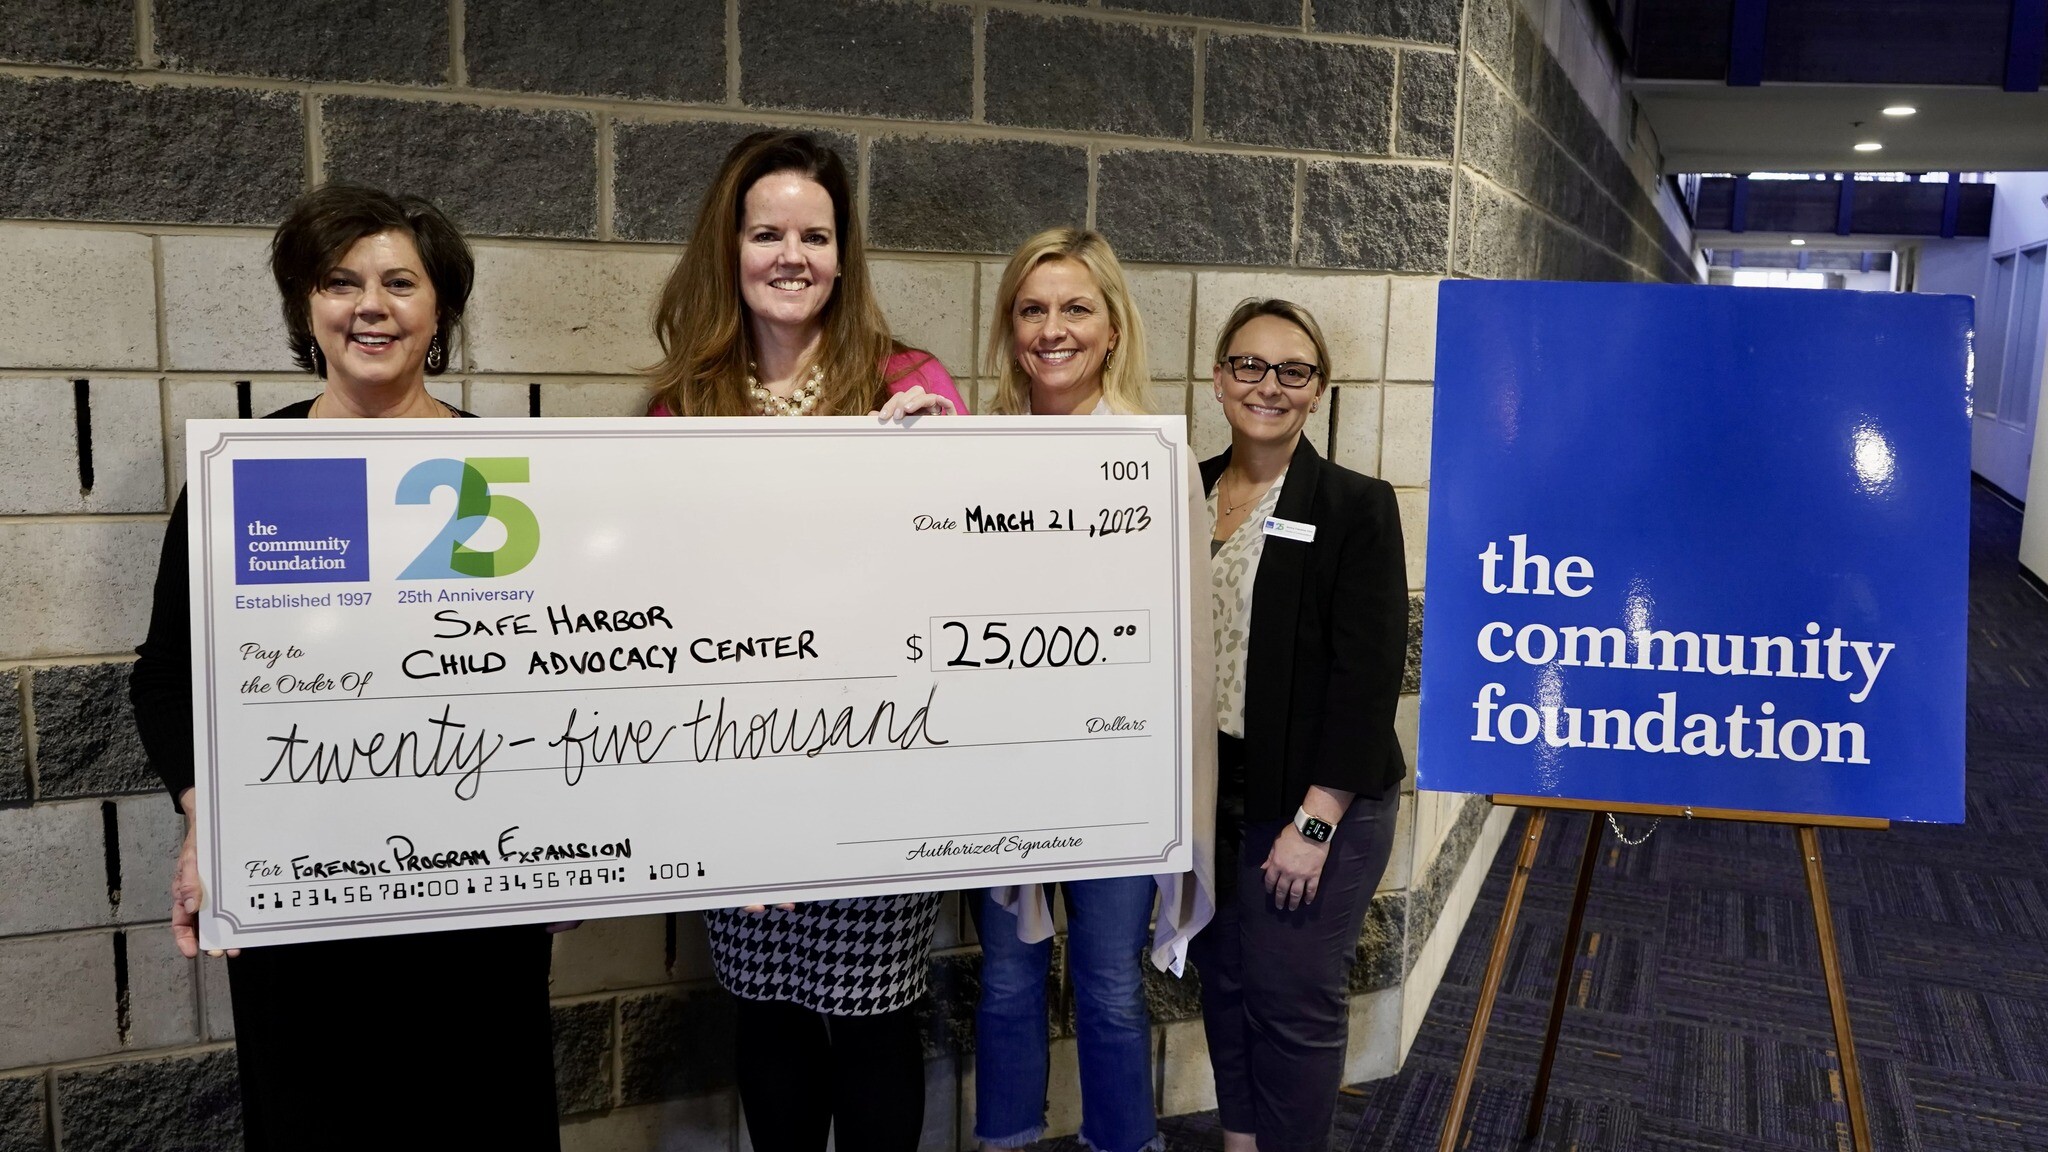 The Community Foundation Awards Safe Harbor A $25,000 Grant